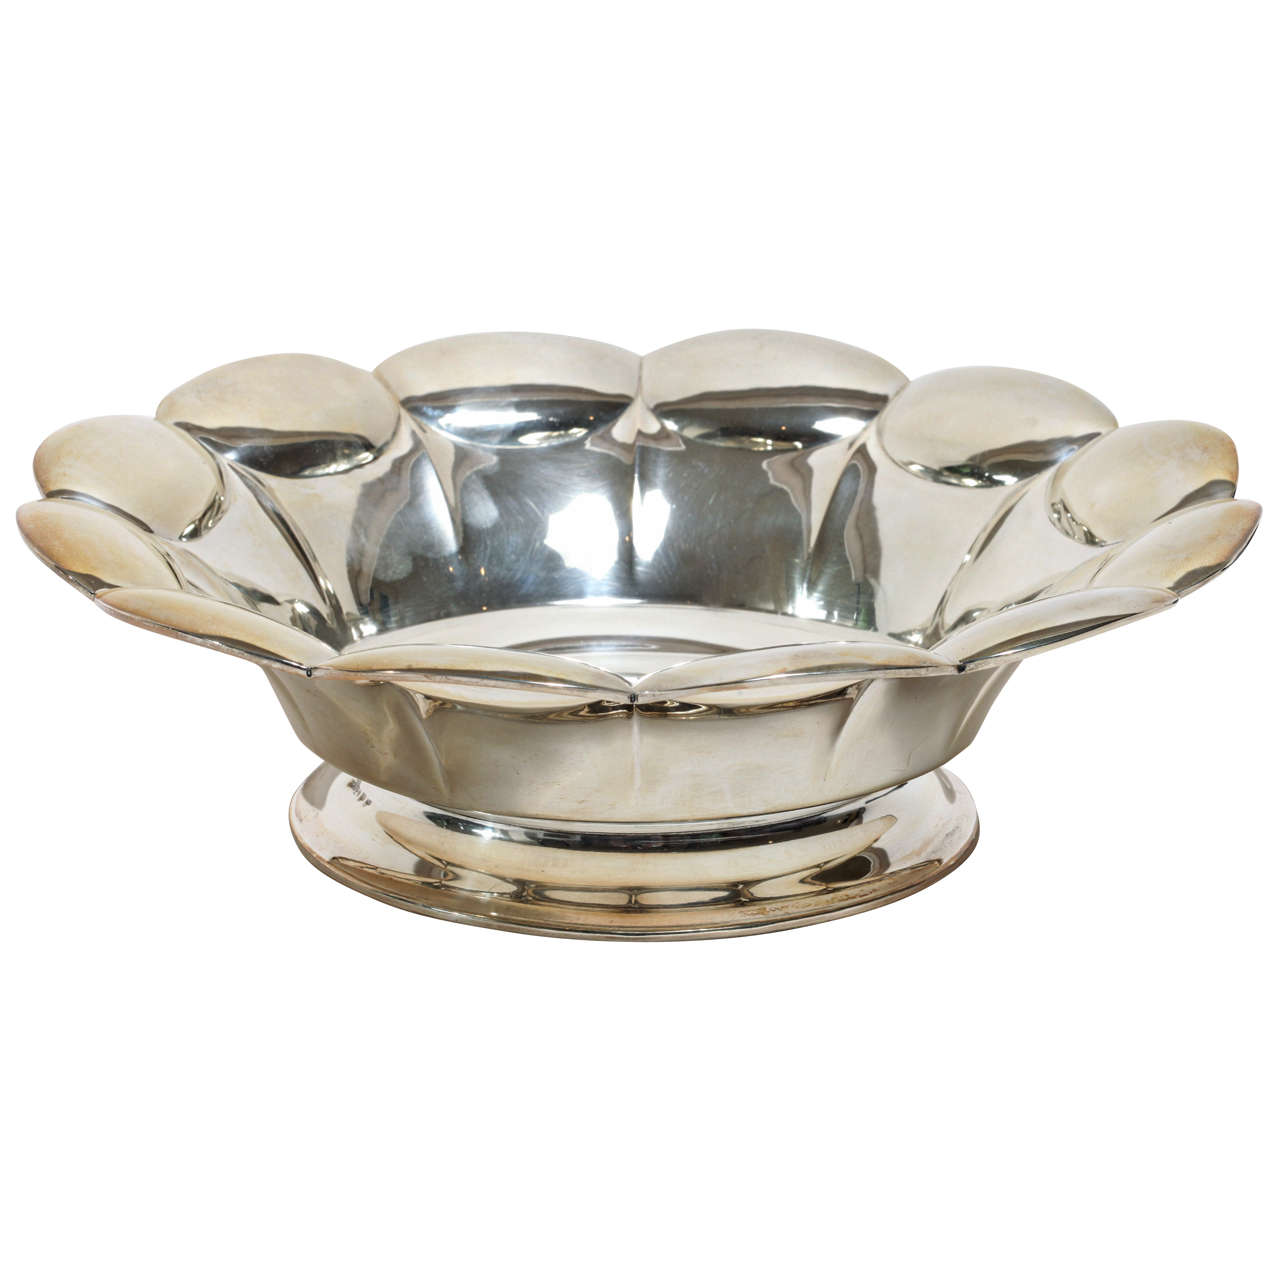 Swedish Art Deco Silver Bowl